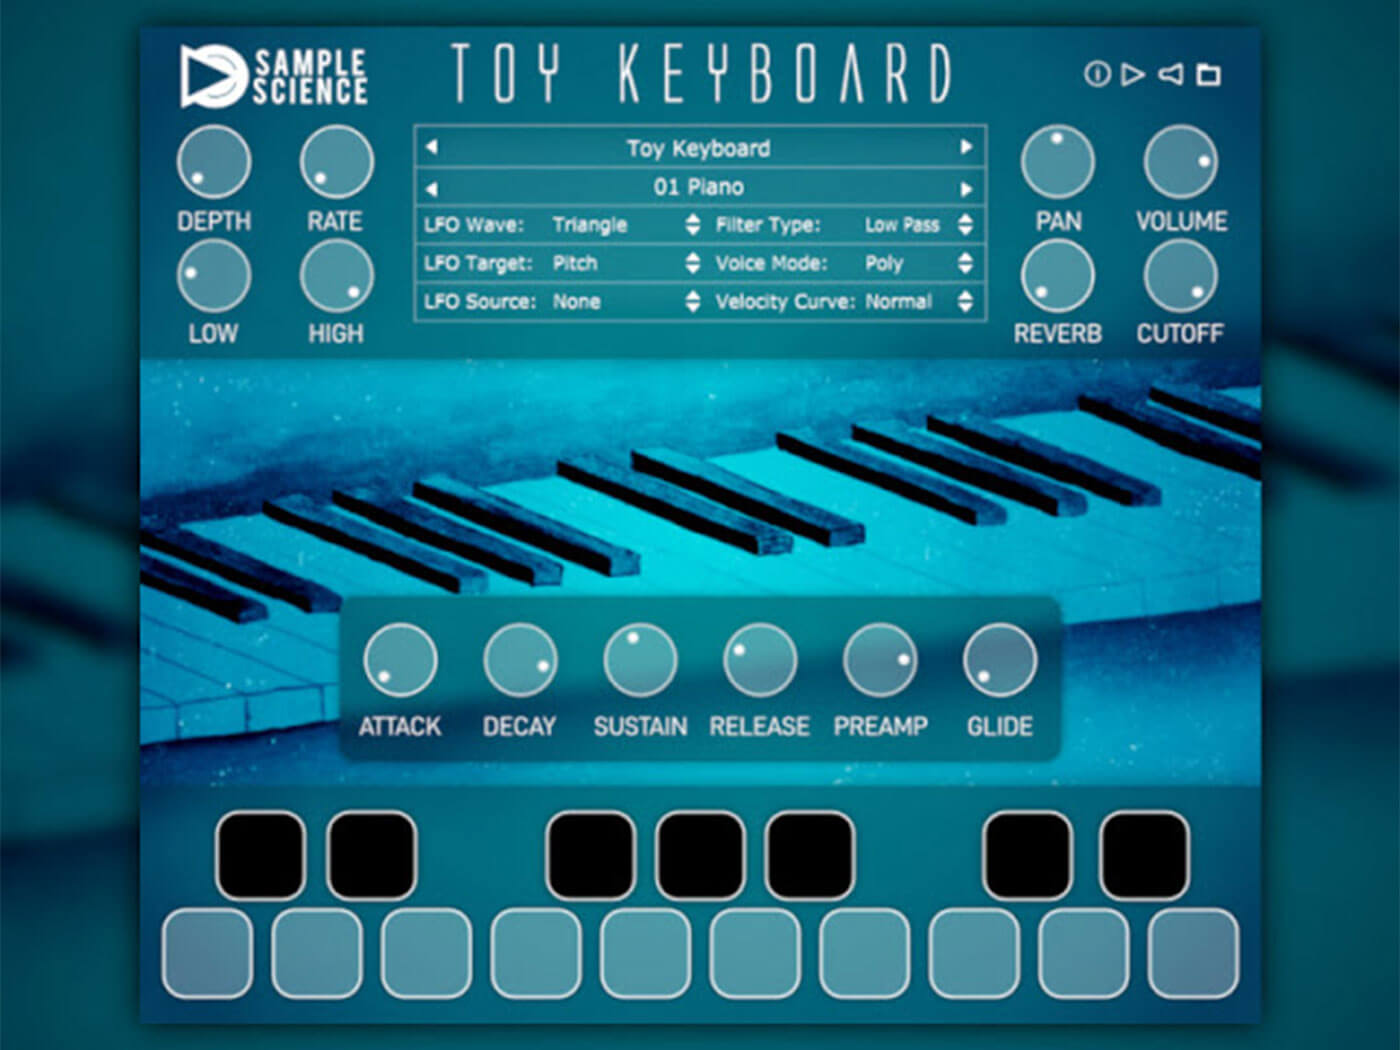 Toy Keyboard v2 Sample Science